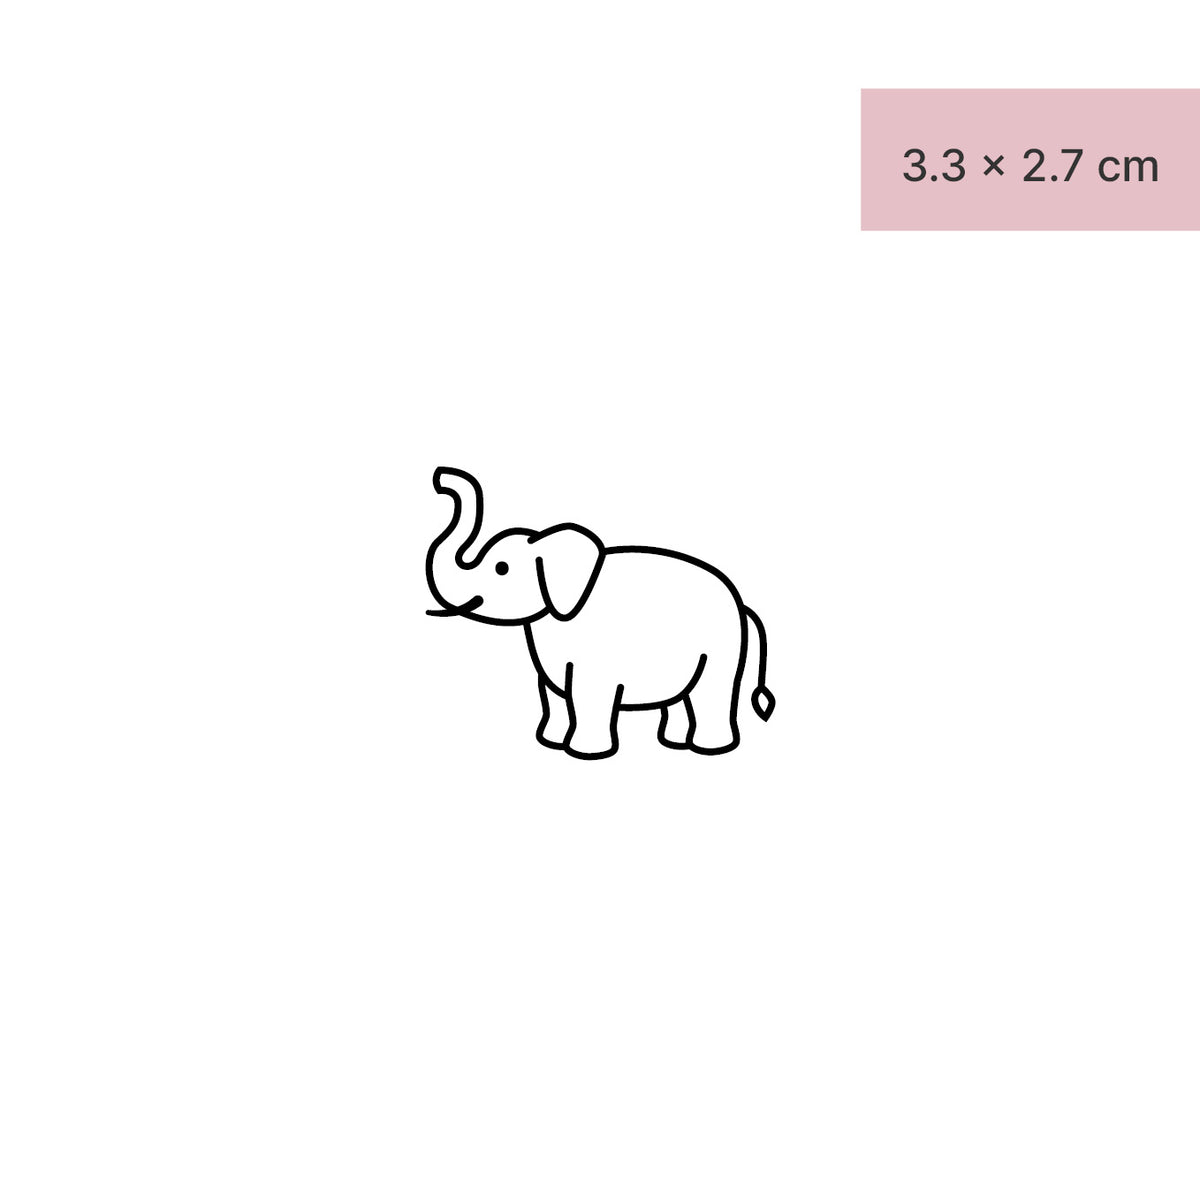 Friendly elephant